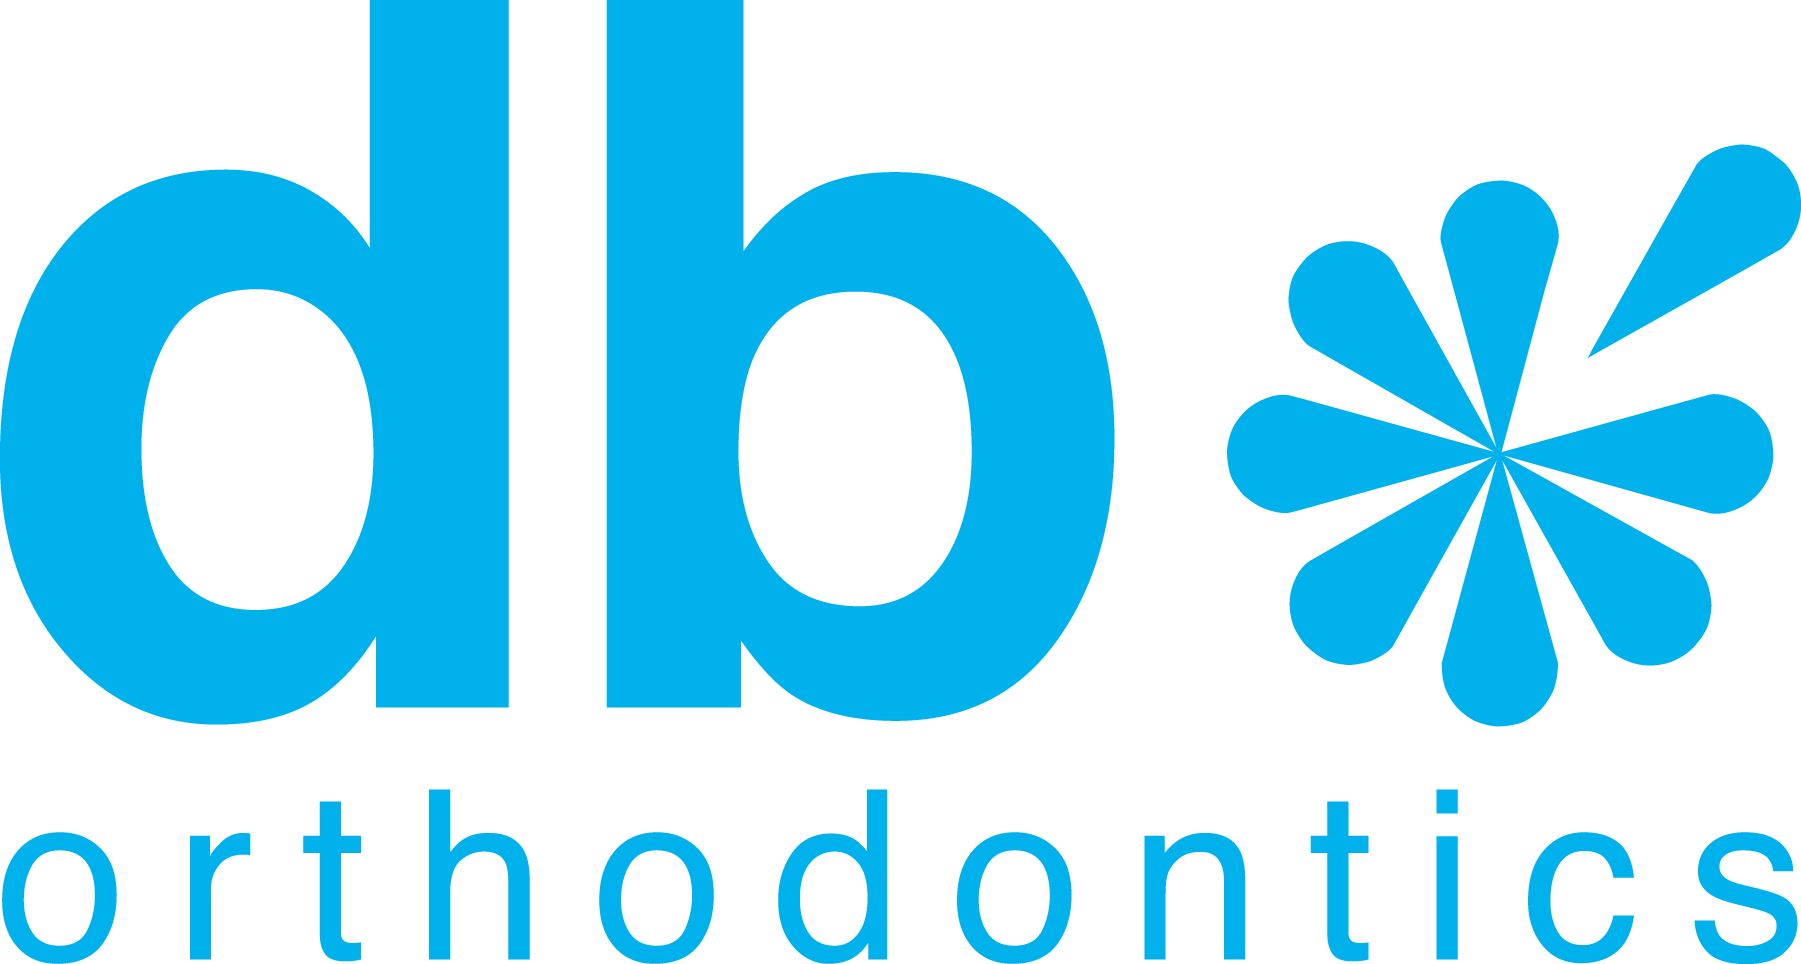 DB Orthodontics